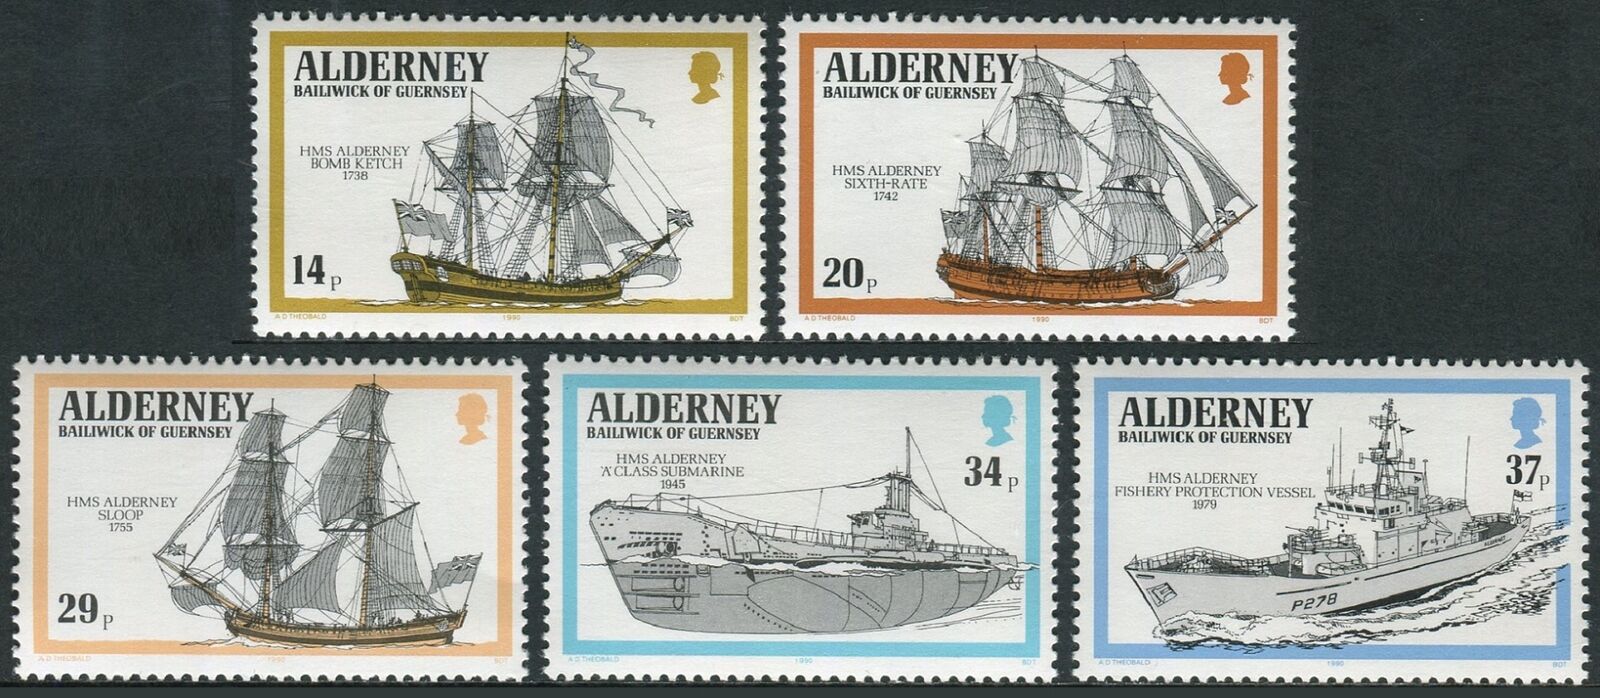 Alderney 1990 / Mnh - Yvert - Mail 43/47 Boats That Publicarion Nom. To The